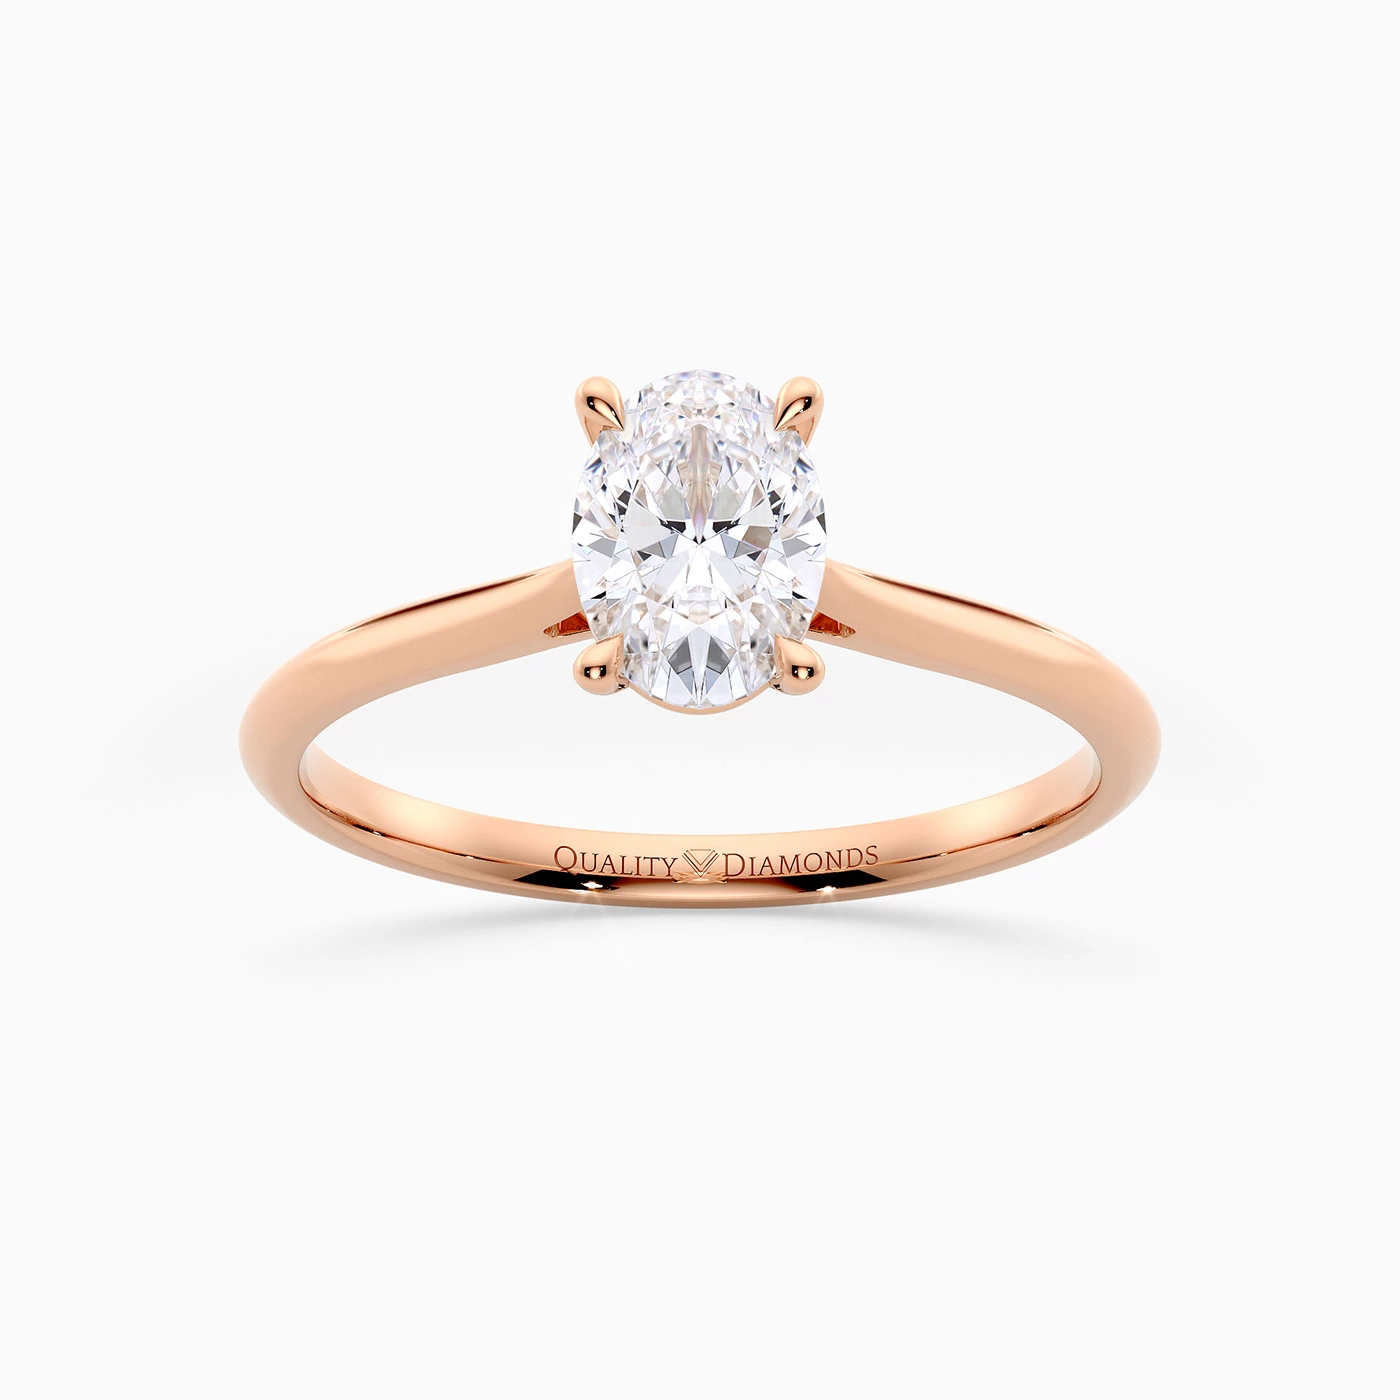 Oval Carys Diamond Ring in 9K Rose Gold